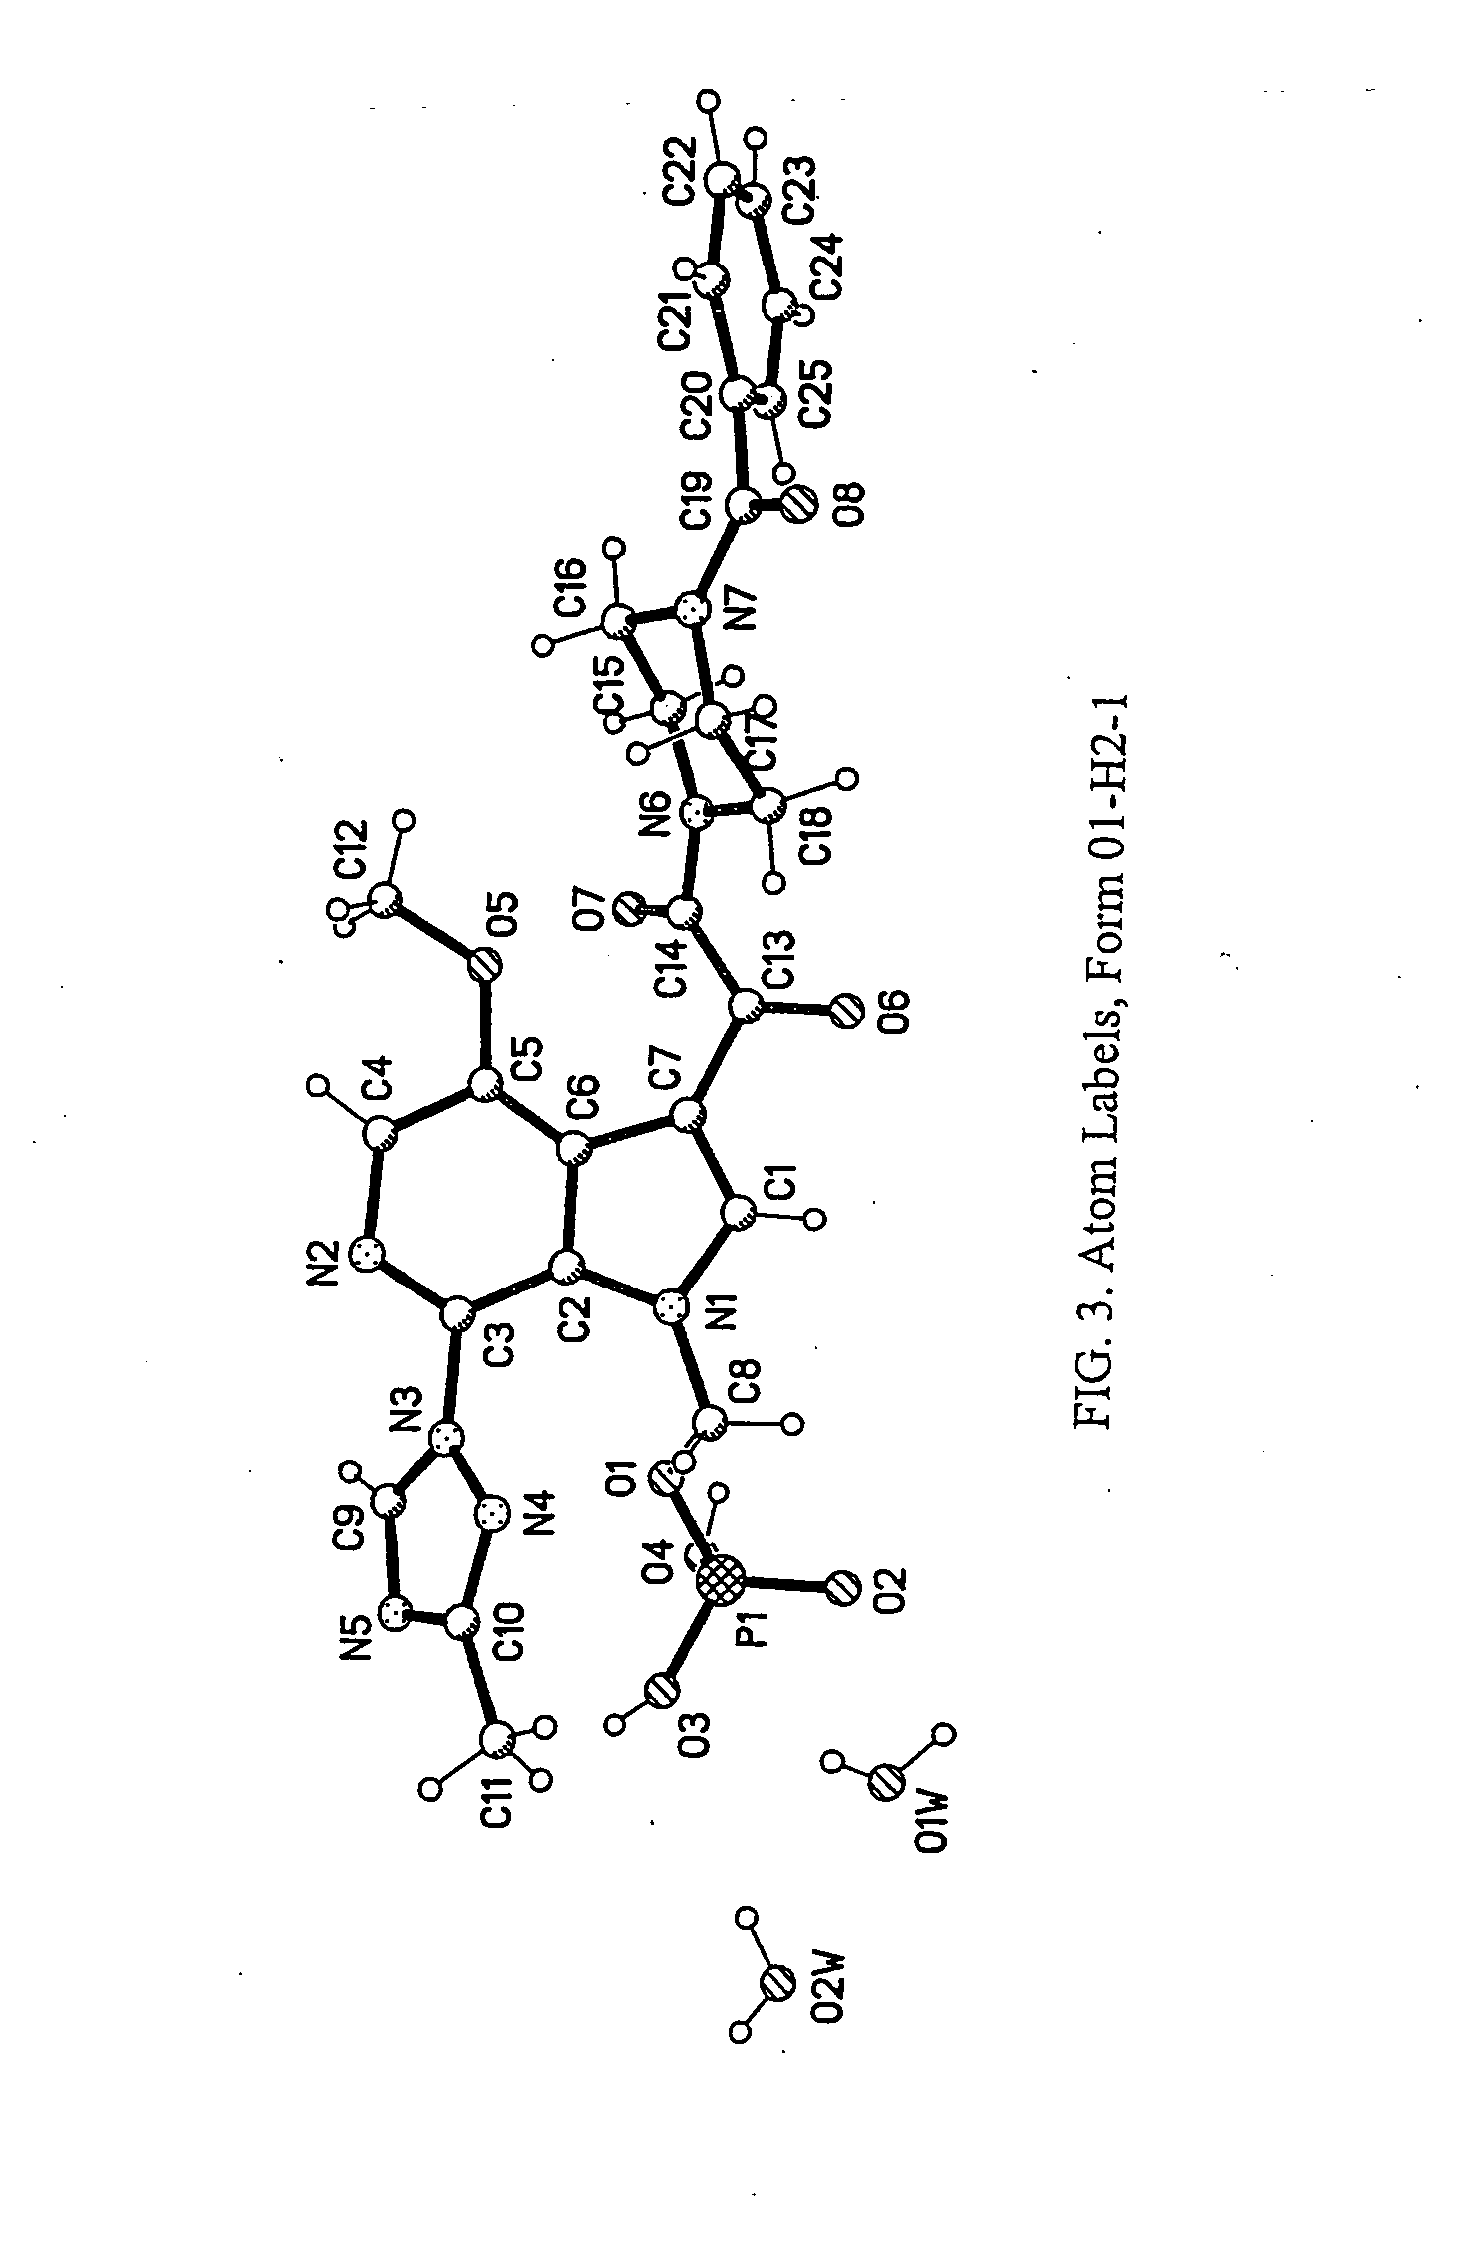 Crystalline forms of 1-benzoyl-4-[2-[4-methoxy-7-(3-methyl-1H-1,2,4-triazol-1-yl)-1-[(phosphonooxy)methyl]-1H-pyrrolo[2,3-c]pyridin-3-yl]-1,2-dioxoethyl]-piperazine